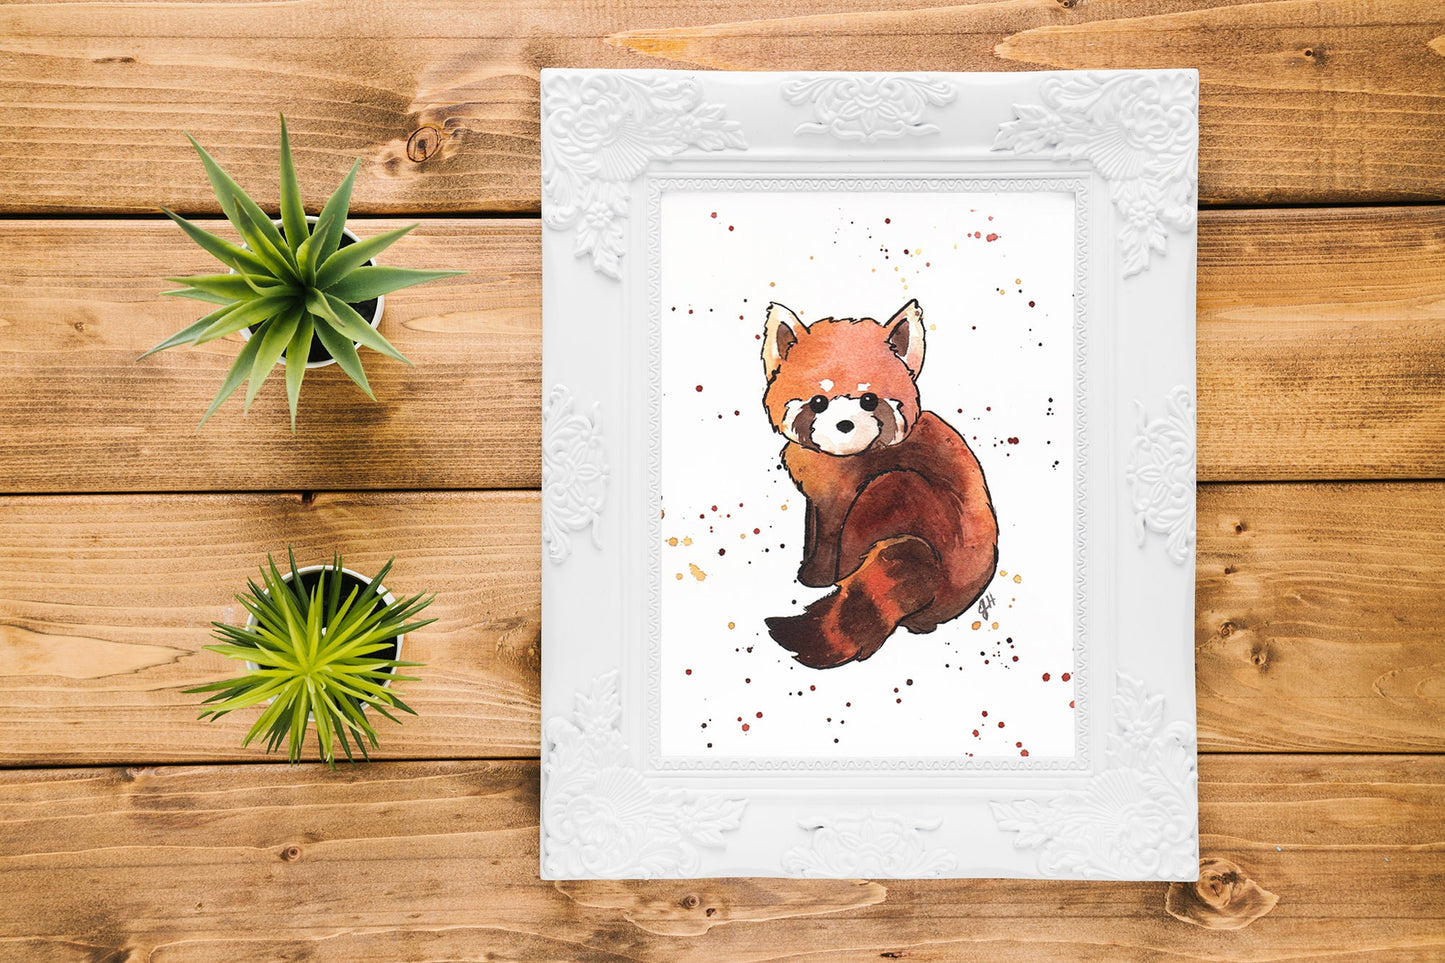 Fine Art Print - Watercolor Red Panda - Digital Reproduction - Giclee Print, Cute Zoo Animal Nursery Decor